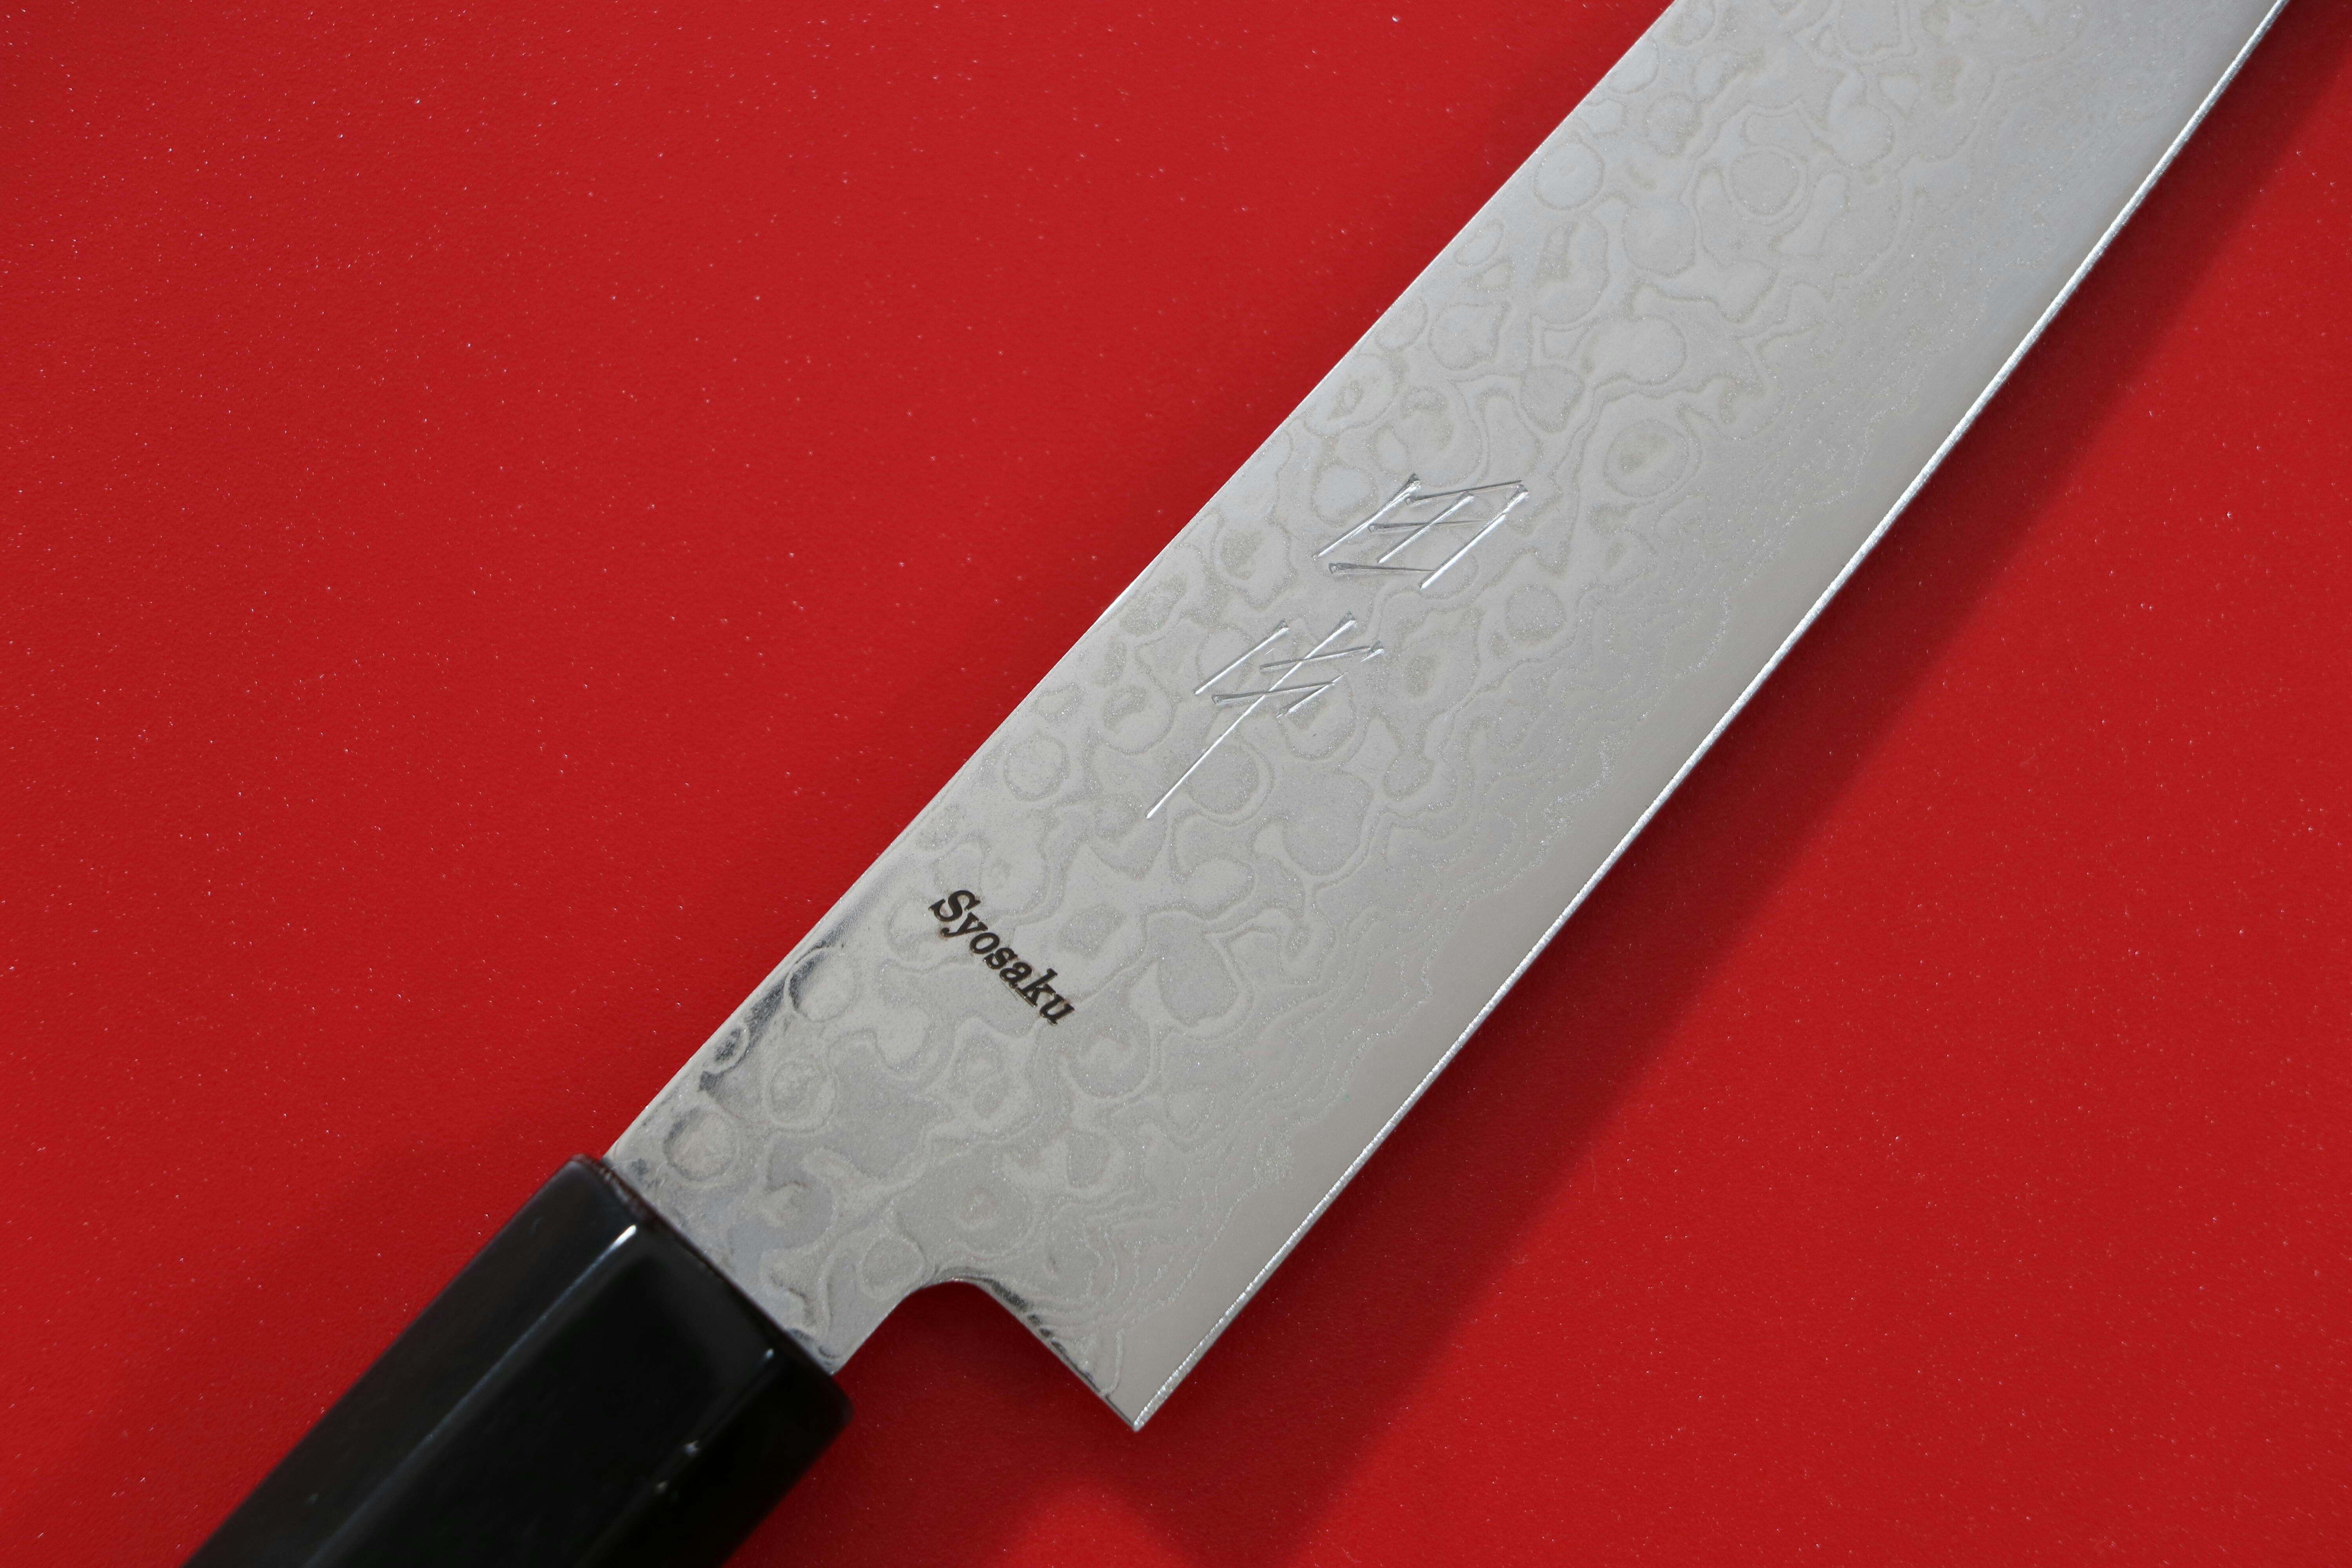 Syosaku Japanese Chef Knife Damascus ZA18 69 Layer Octagonal Magnolia Wood Handle, Gyuto 9.5-Inch (240mm)